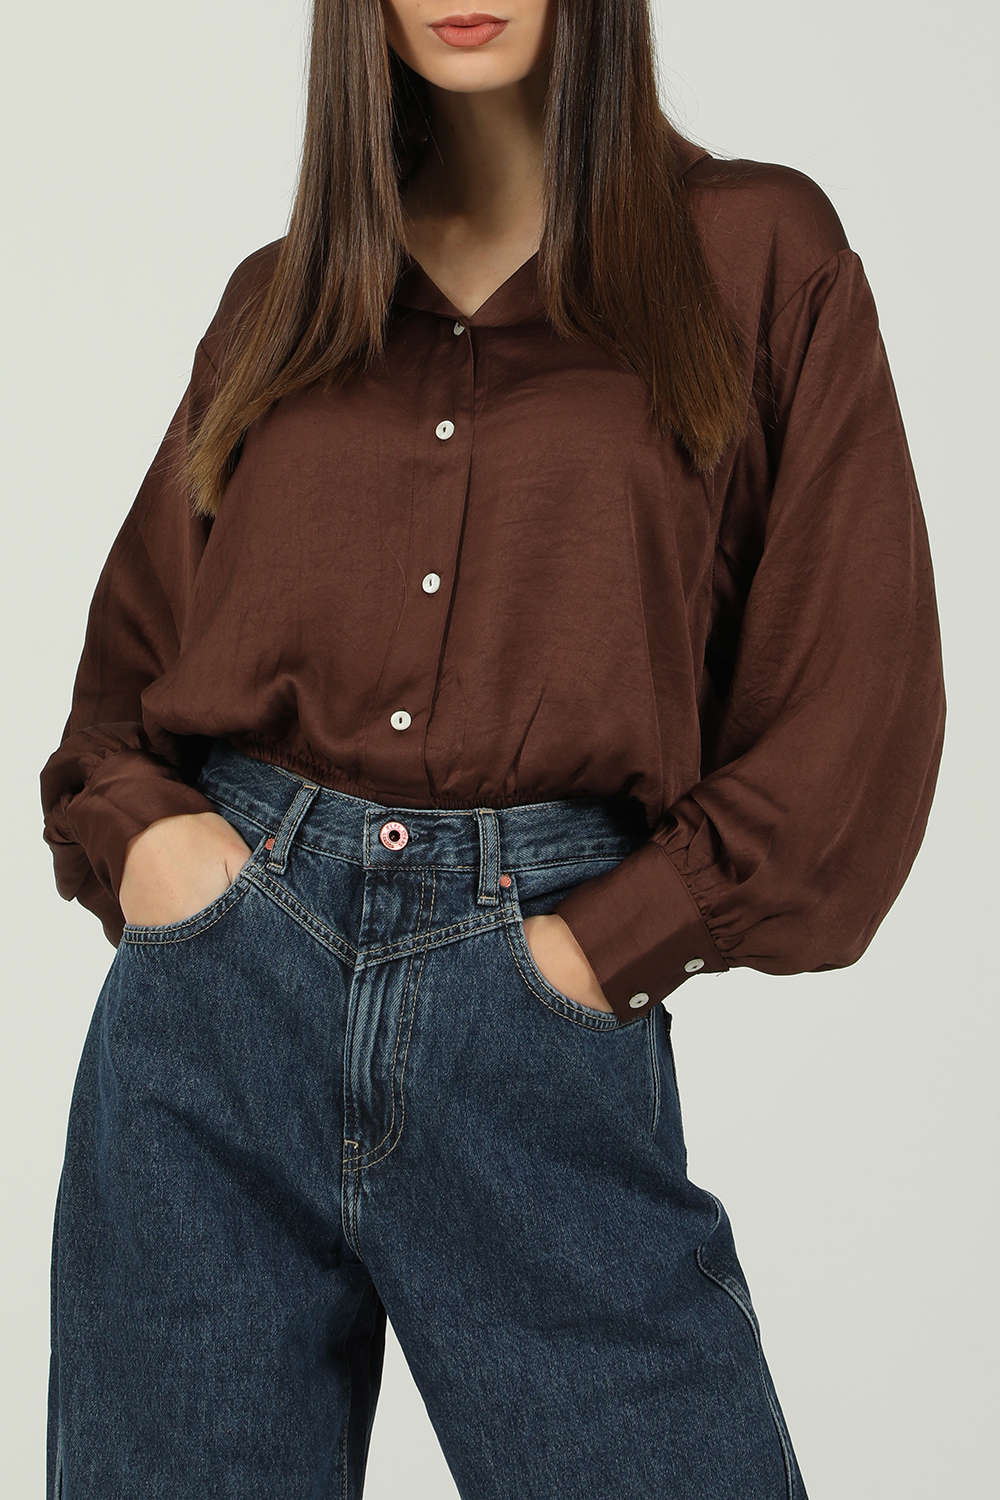 AMERICAN VINTAGE – Γυναικειο πουκαμισο AMERICAN VINTAGE WID06C σοκολατι